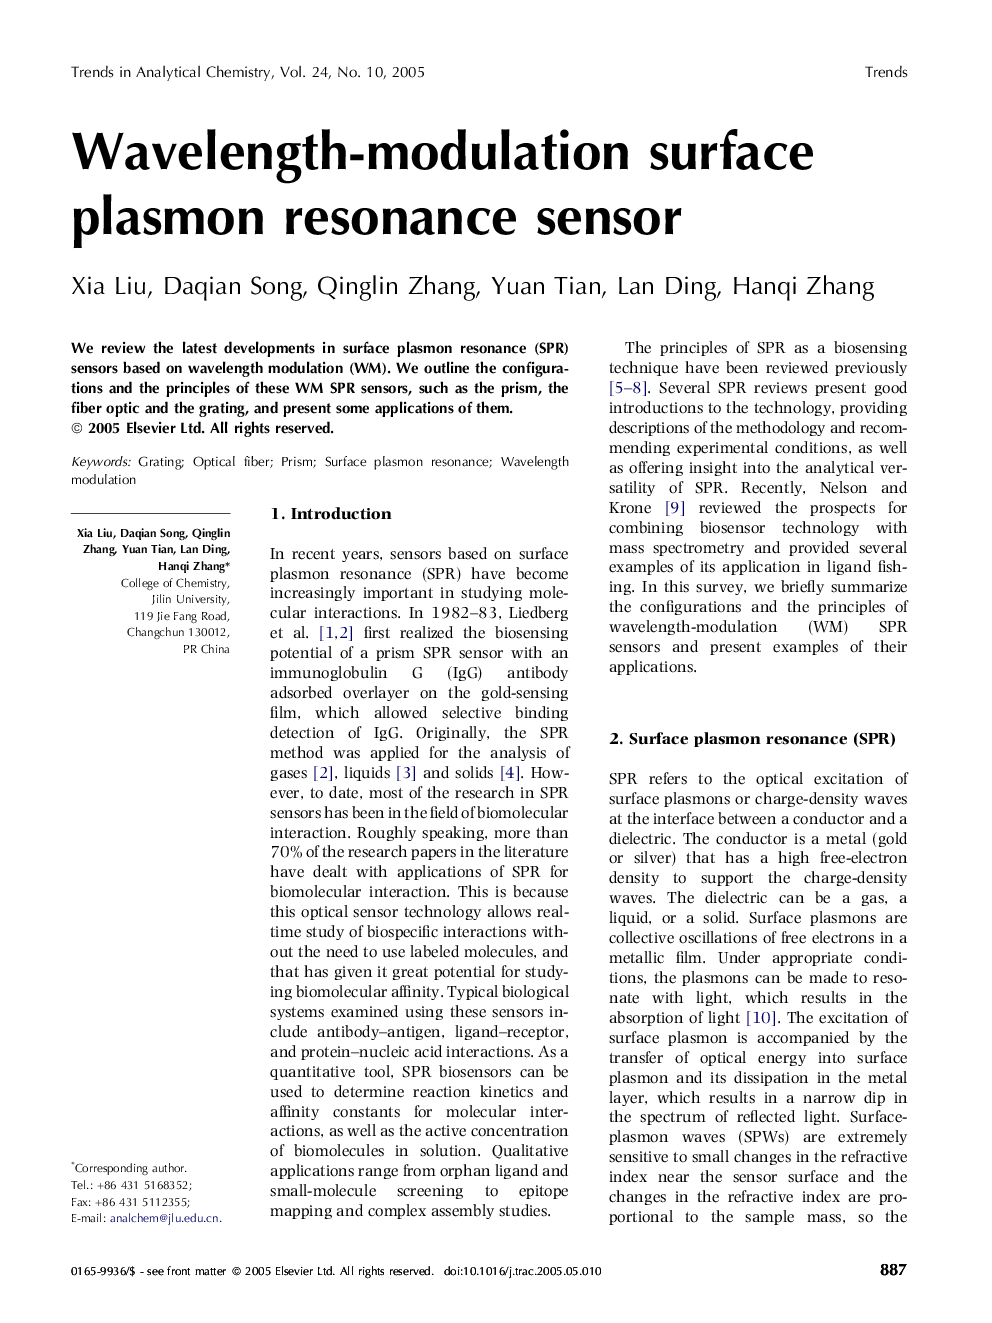 Wavelength-modulation surface plasmon resonance sensor